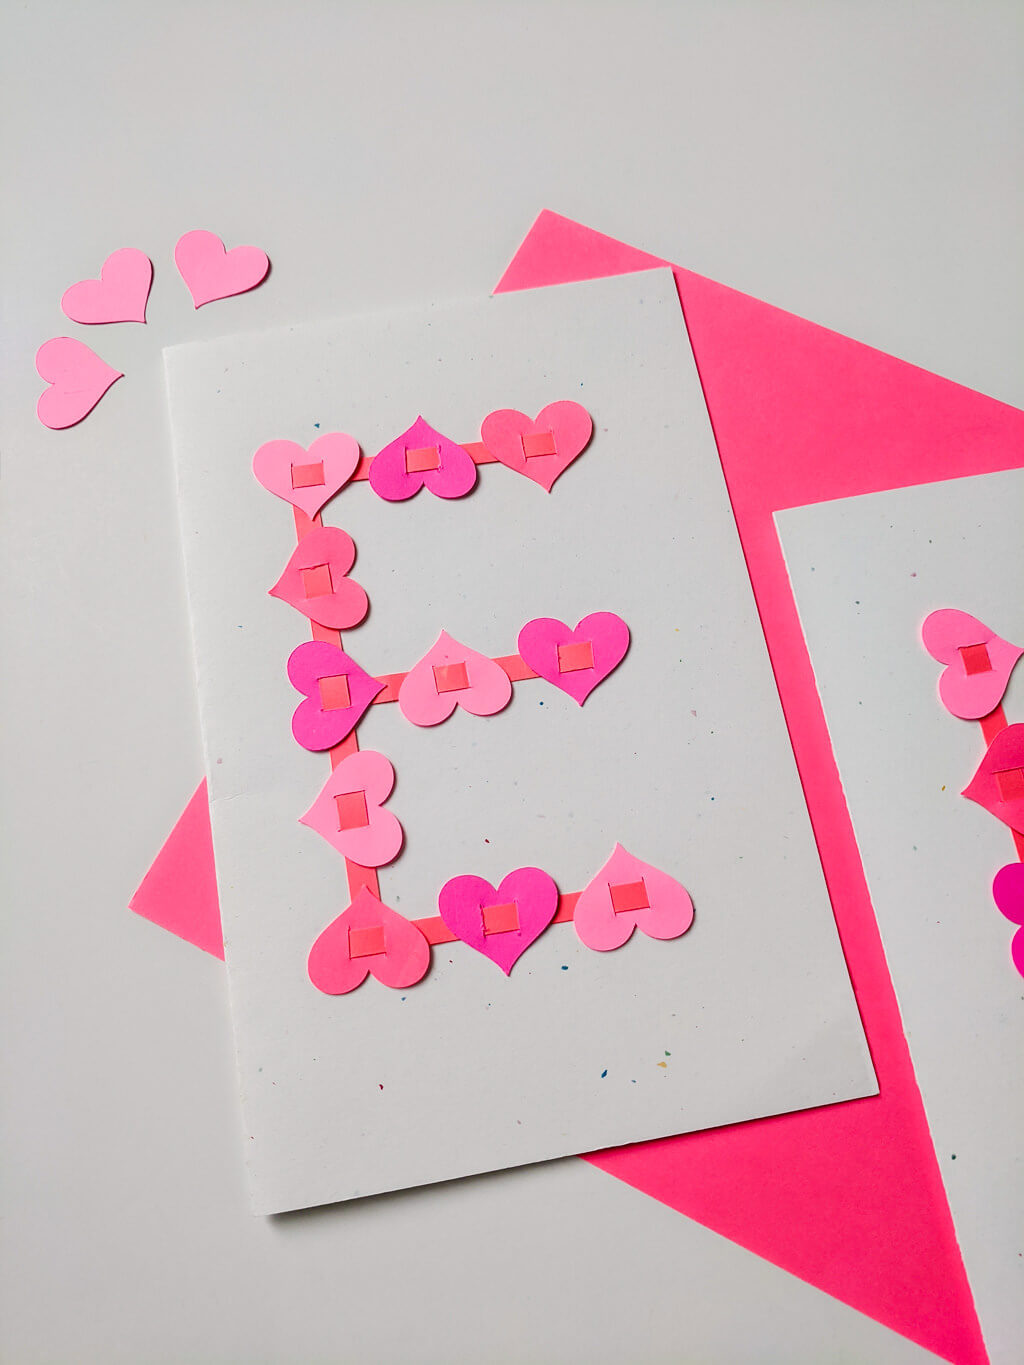 Heart Letter E handmade Valentine's Day card or valentines artwork